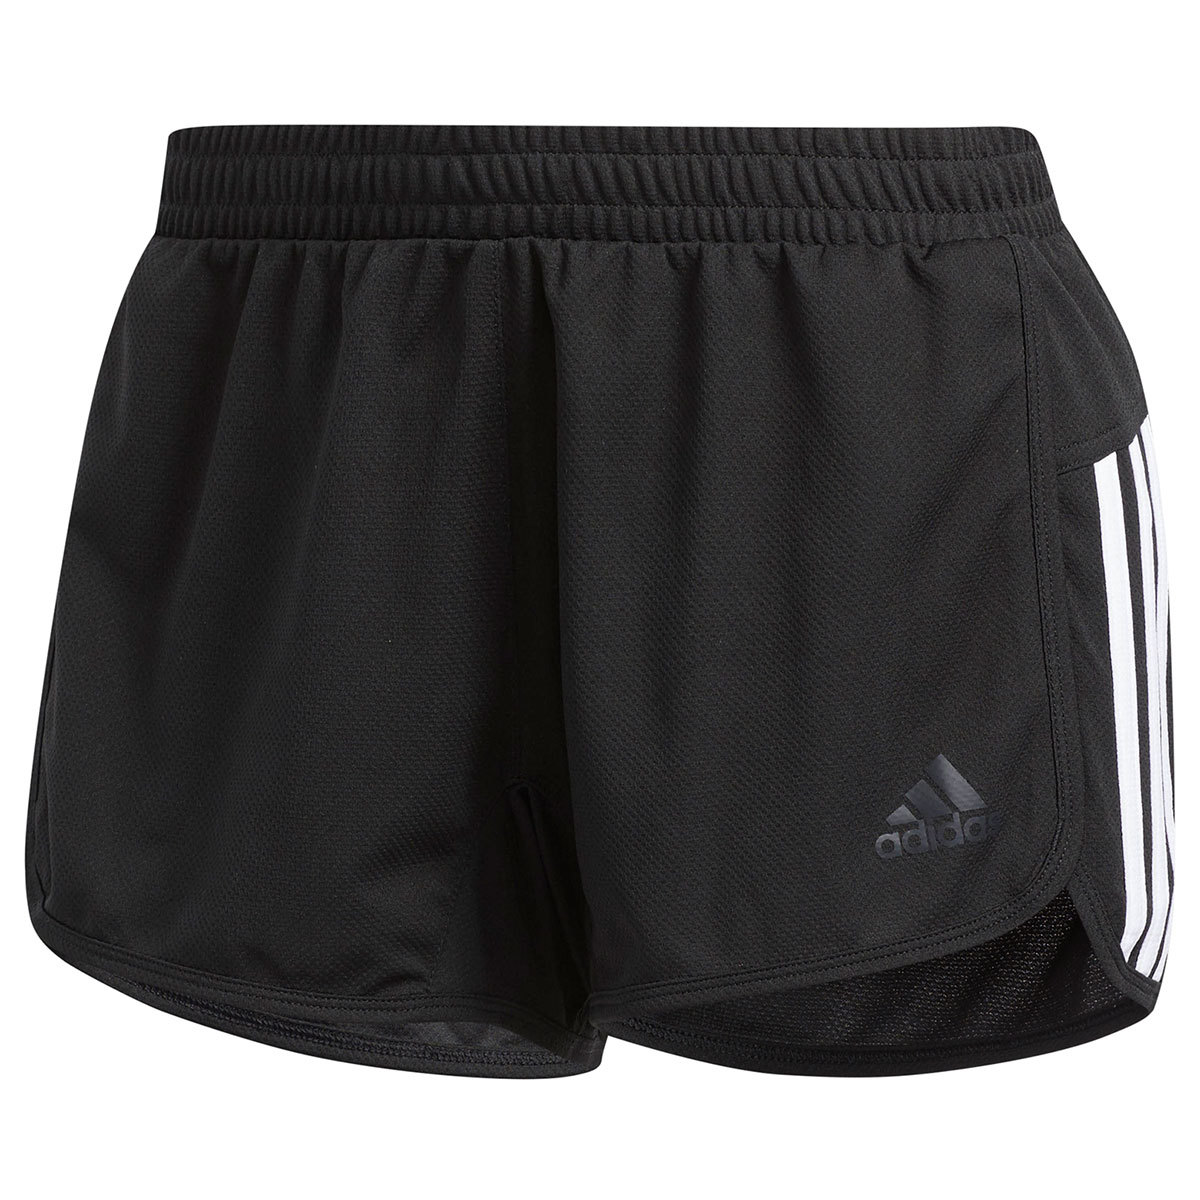 Adidas Women's D2M Knit Shorts - Black, L